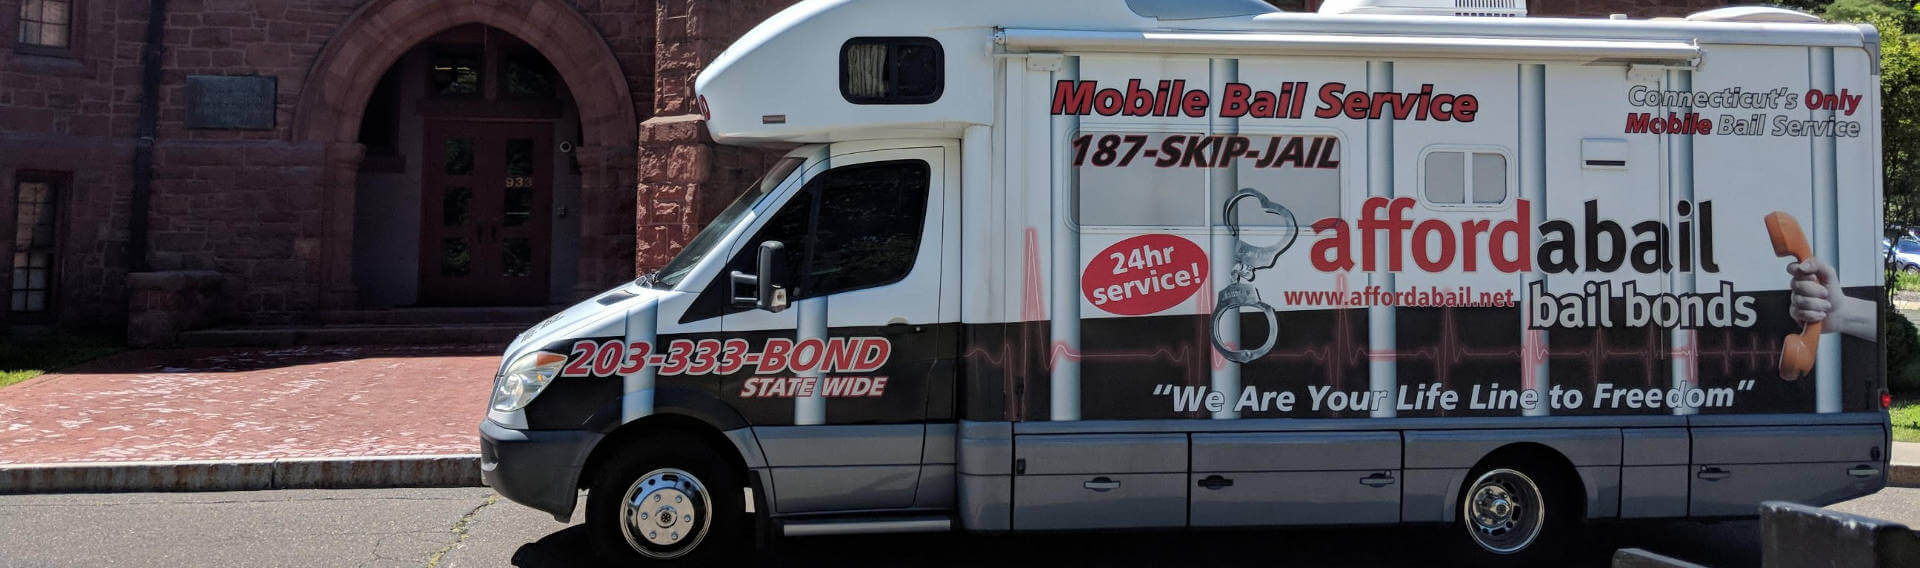 Mobile bail bonds service in Hamden CT